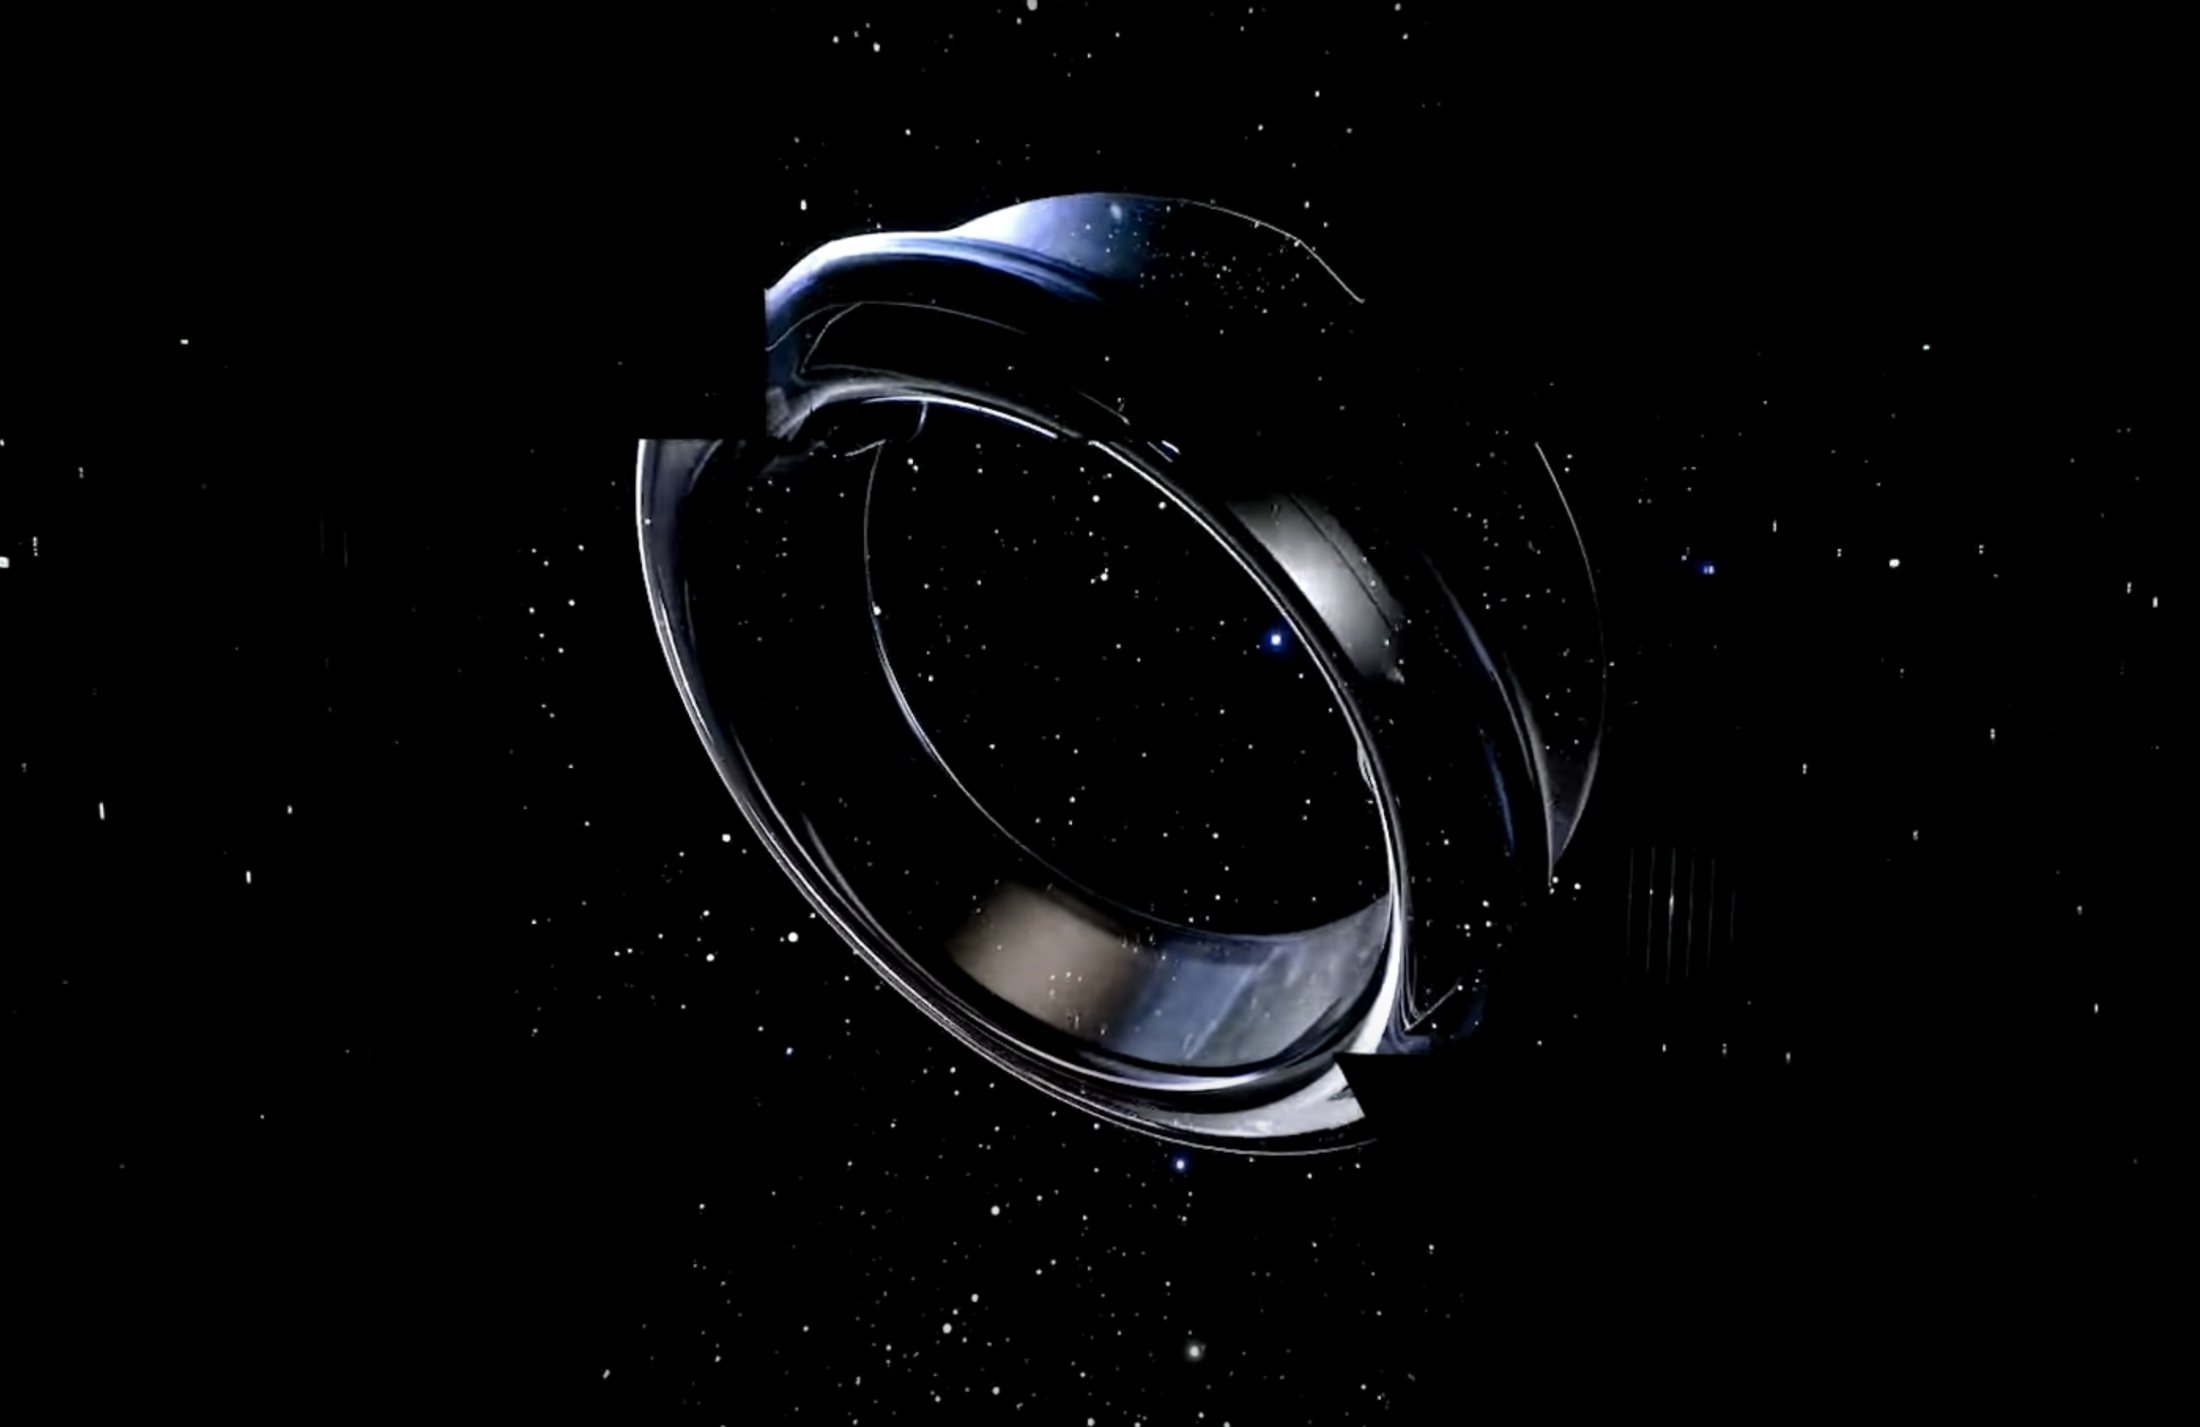 Galaxy Ring presenterà "tecnologie di sensori leader"